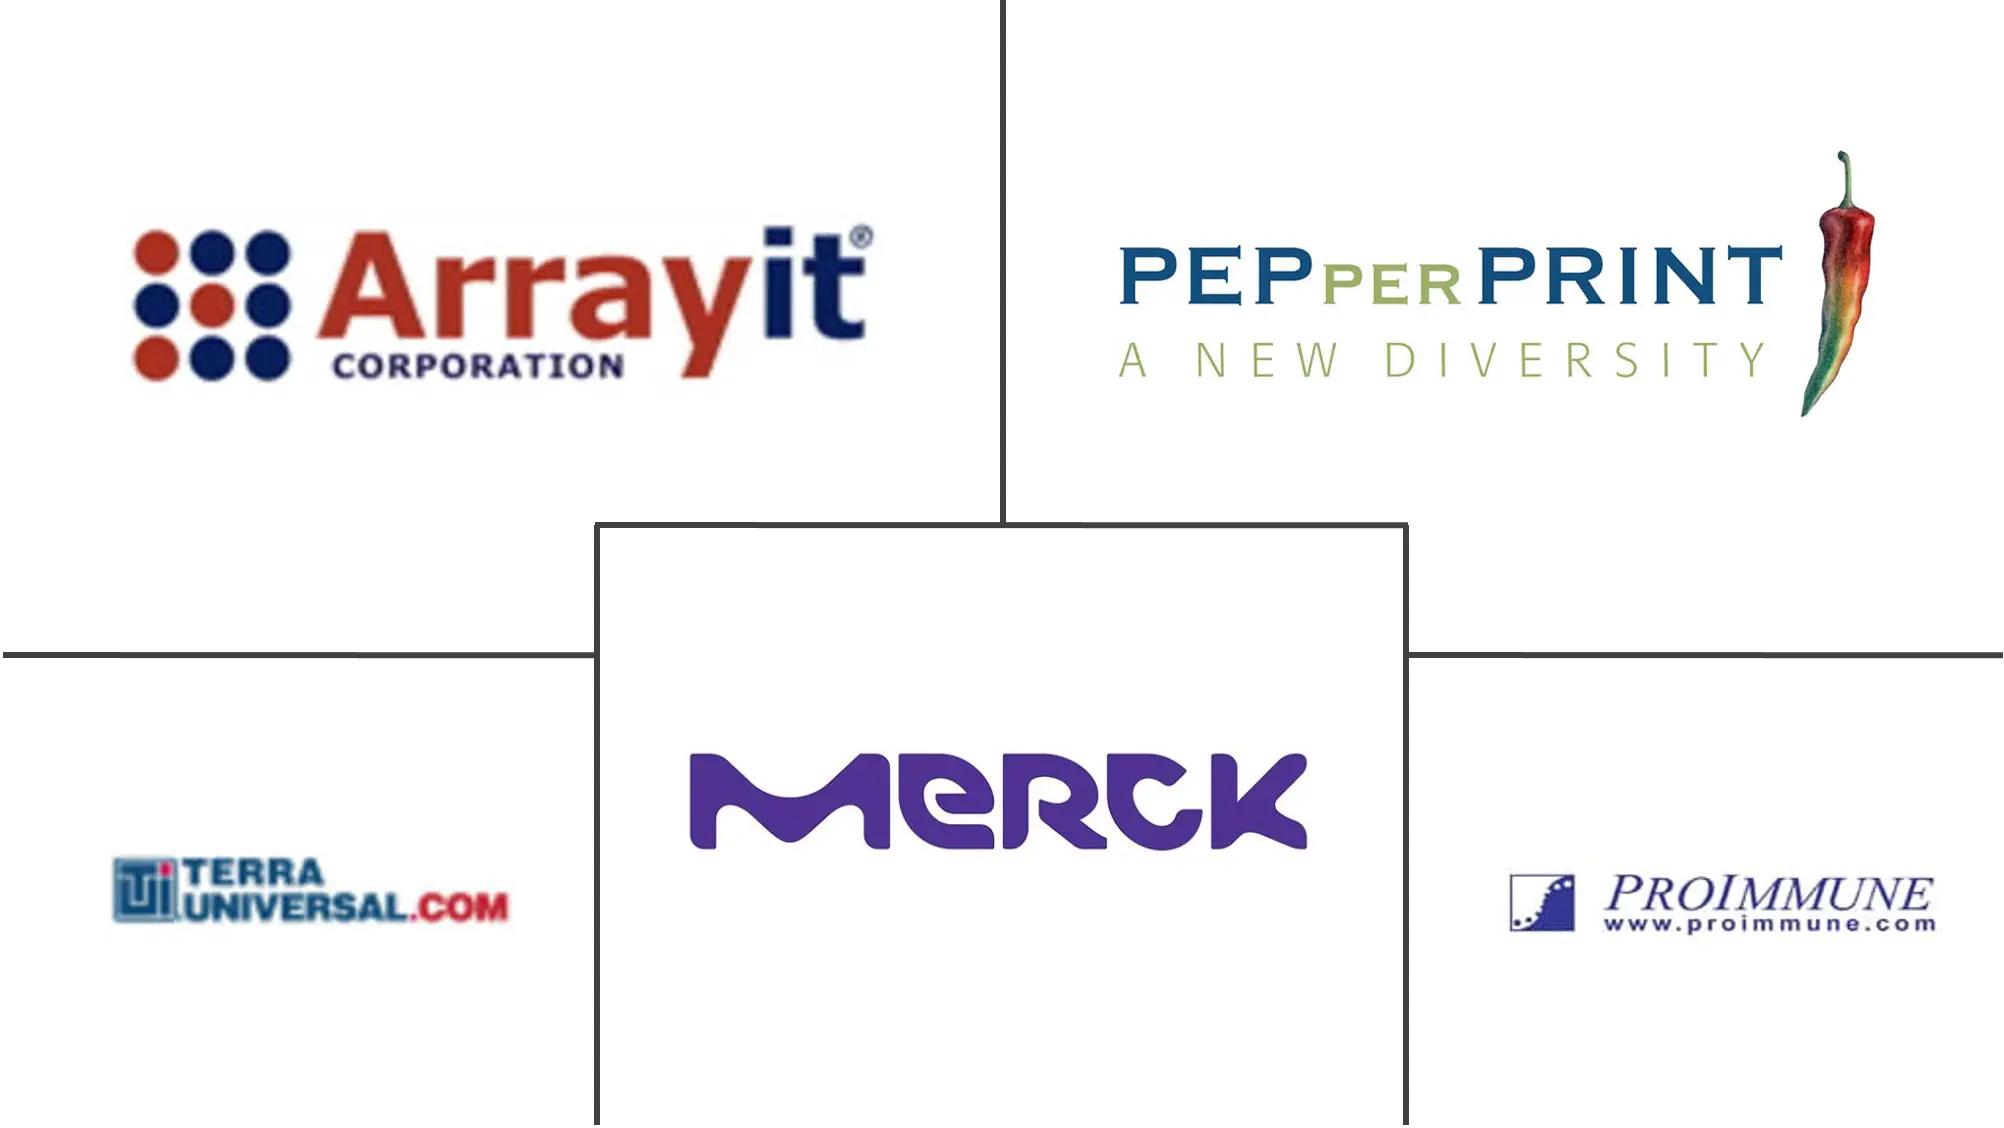 Peptide Microarray Market Major Players